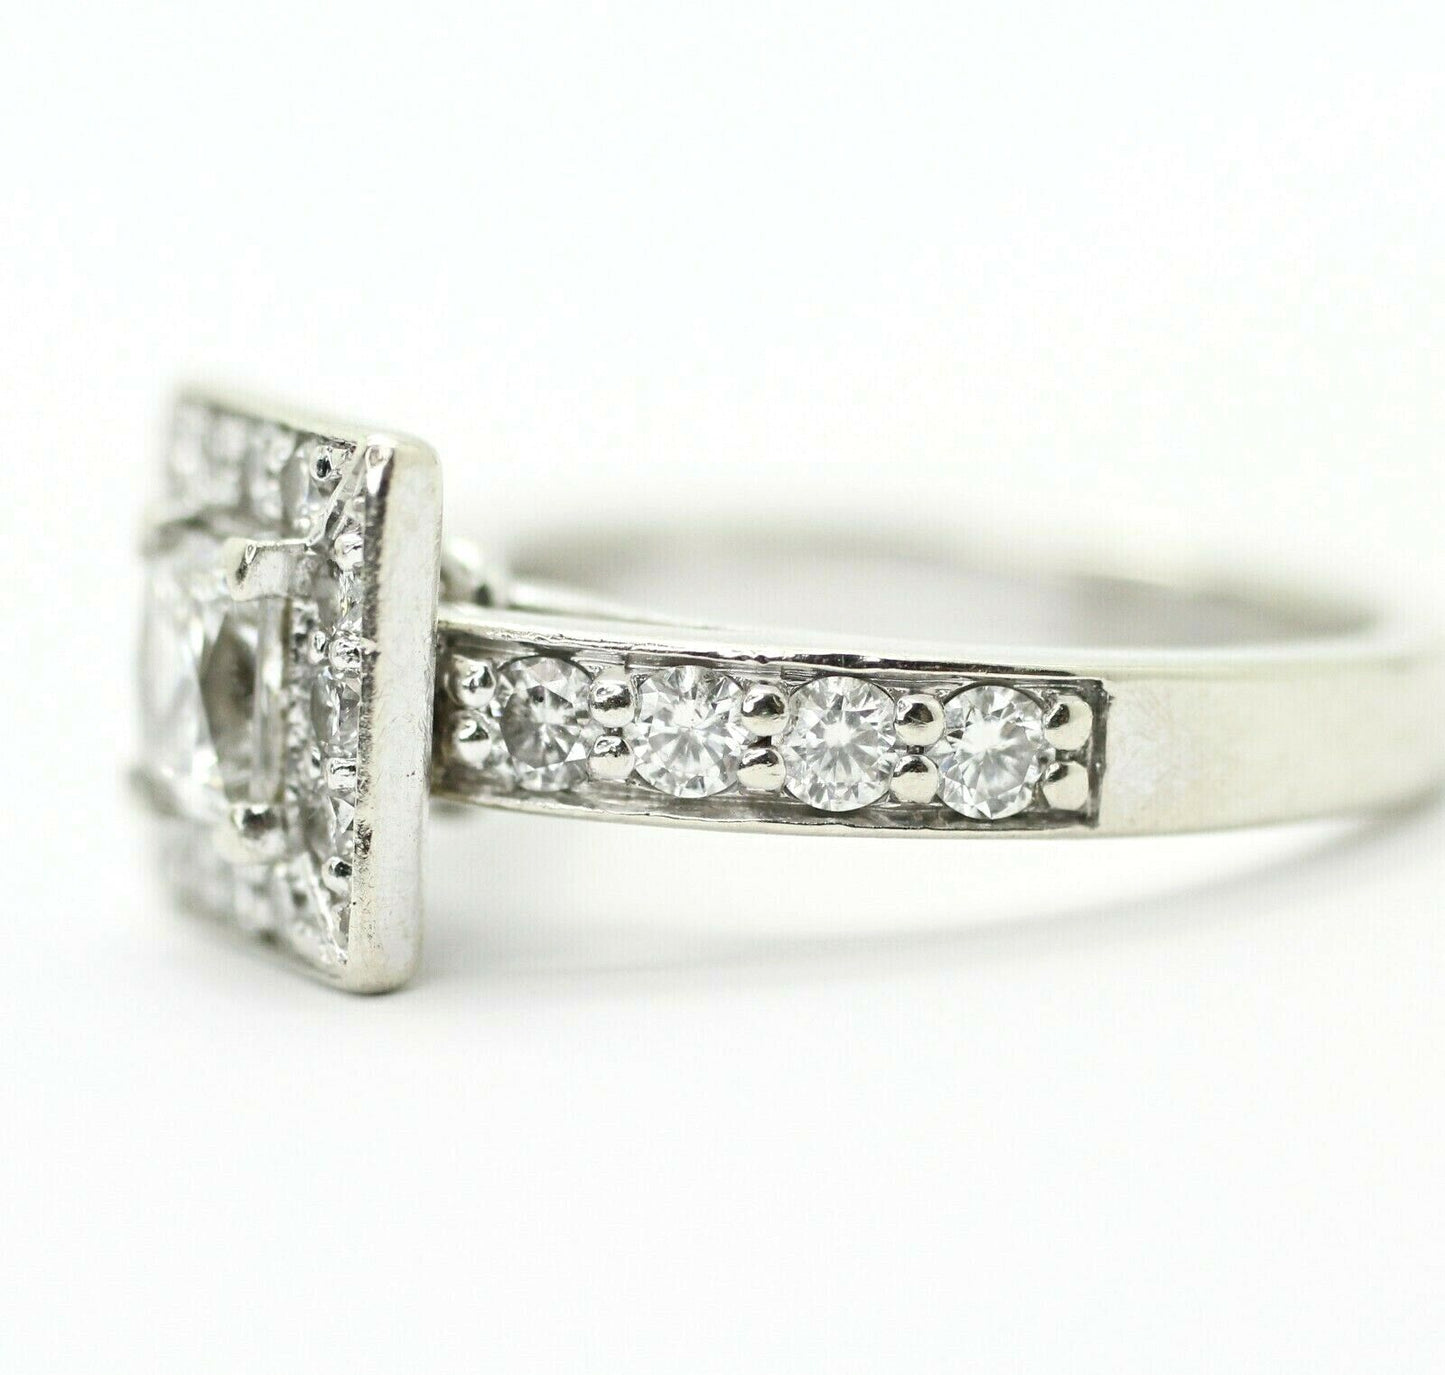 Leo Princess Cut Diamonds Halo Engagement Ring in 10k White Gold 5.25us